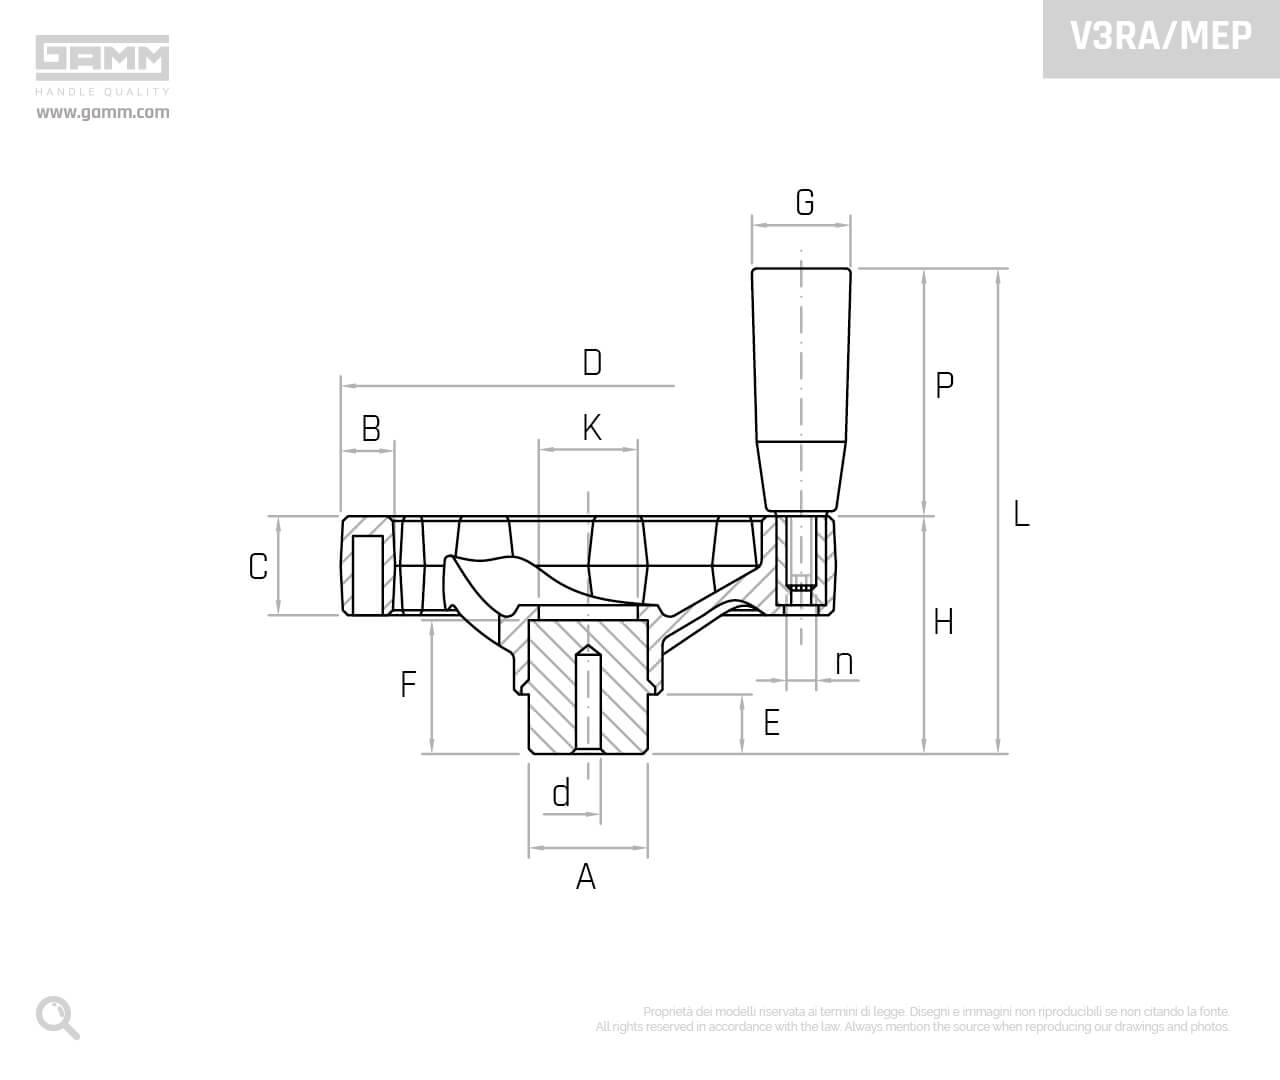 V3RA MEP disegno volantini di manovra GAMM